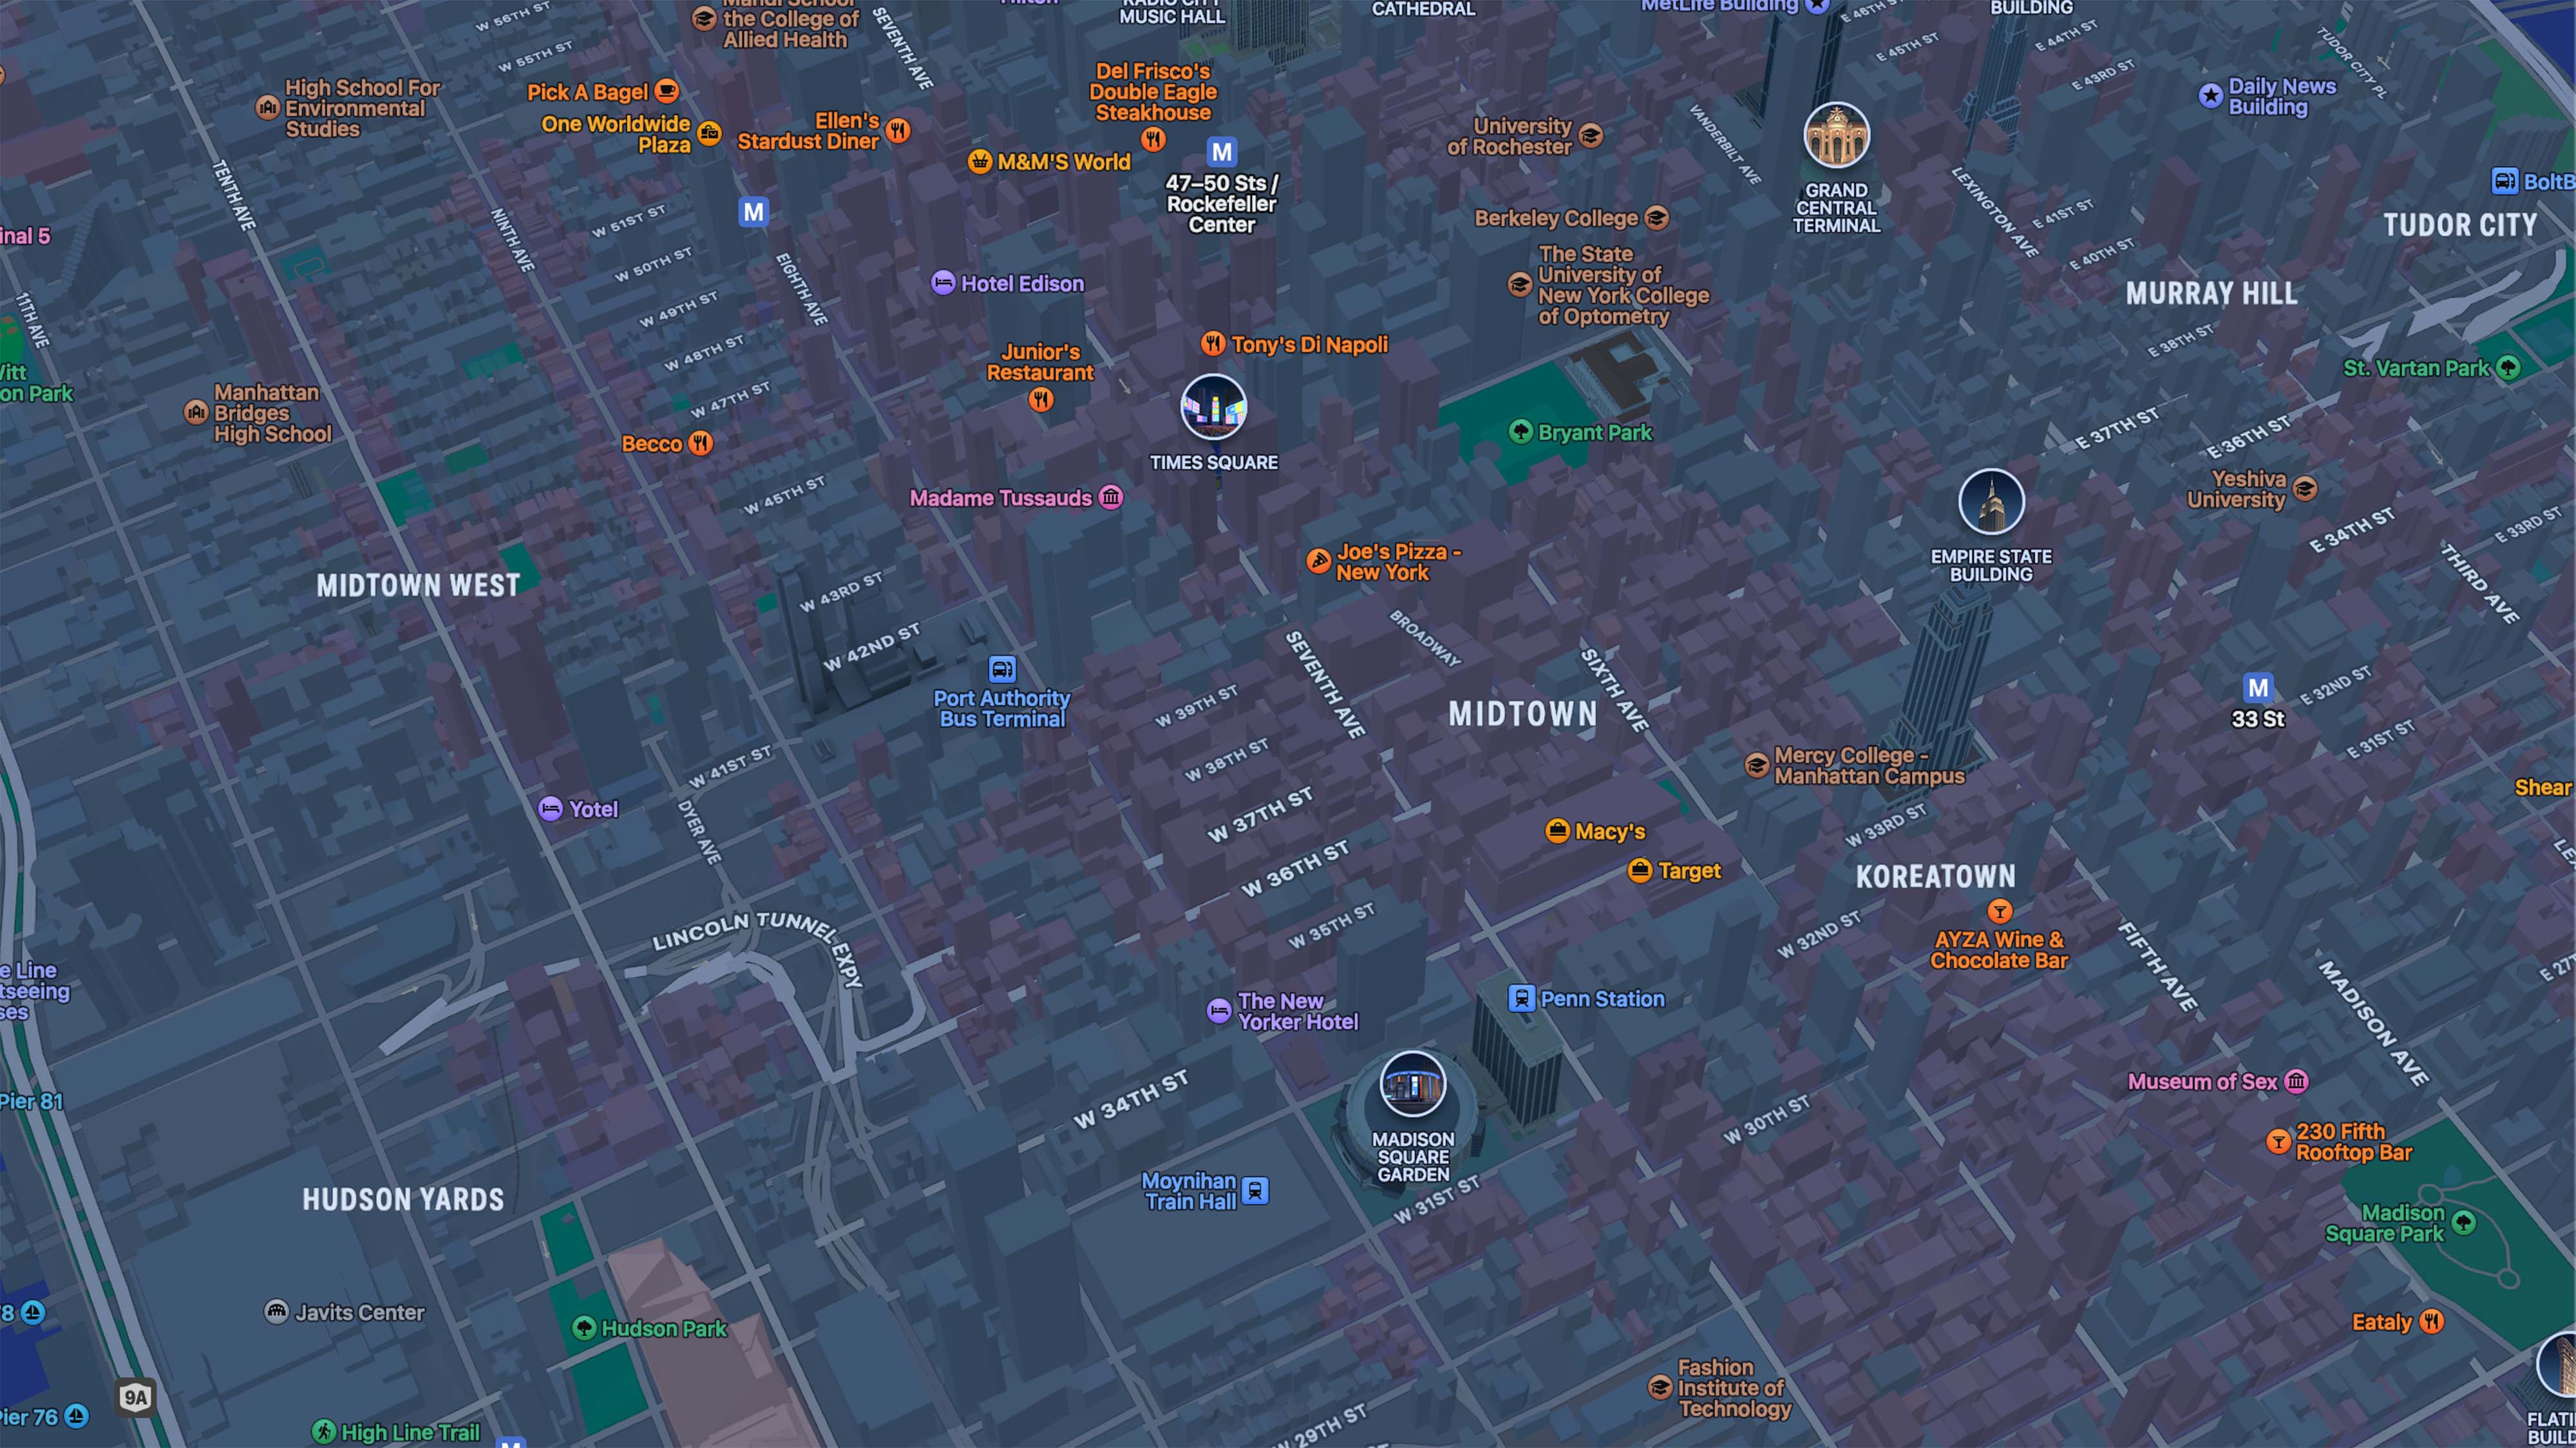 Boston's iconic landmarks go 3D in latest Apple Maps update